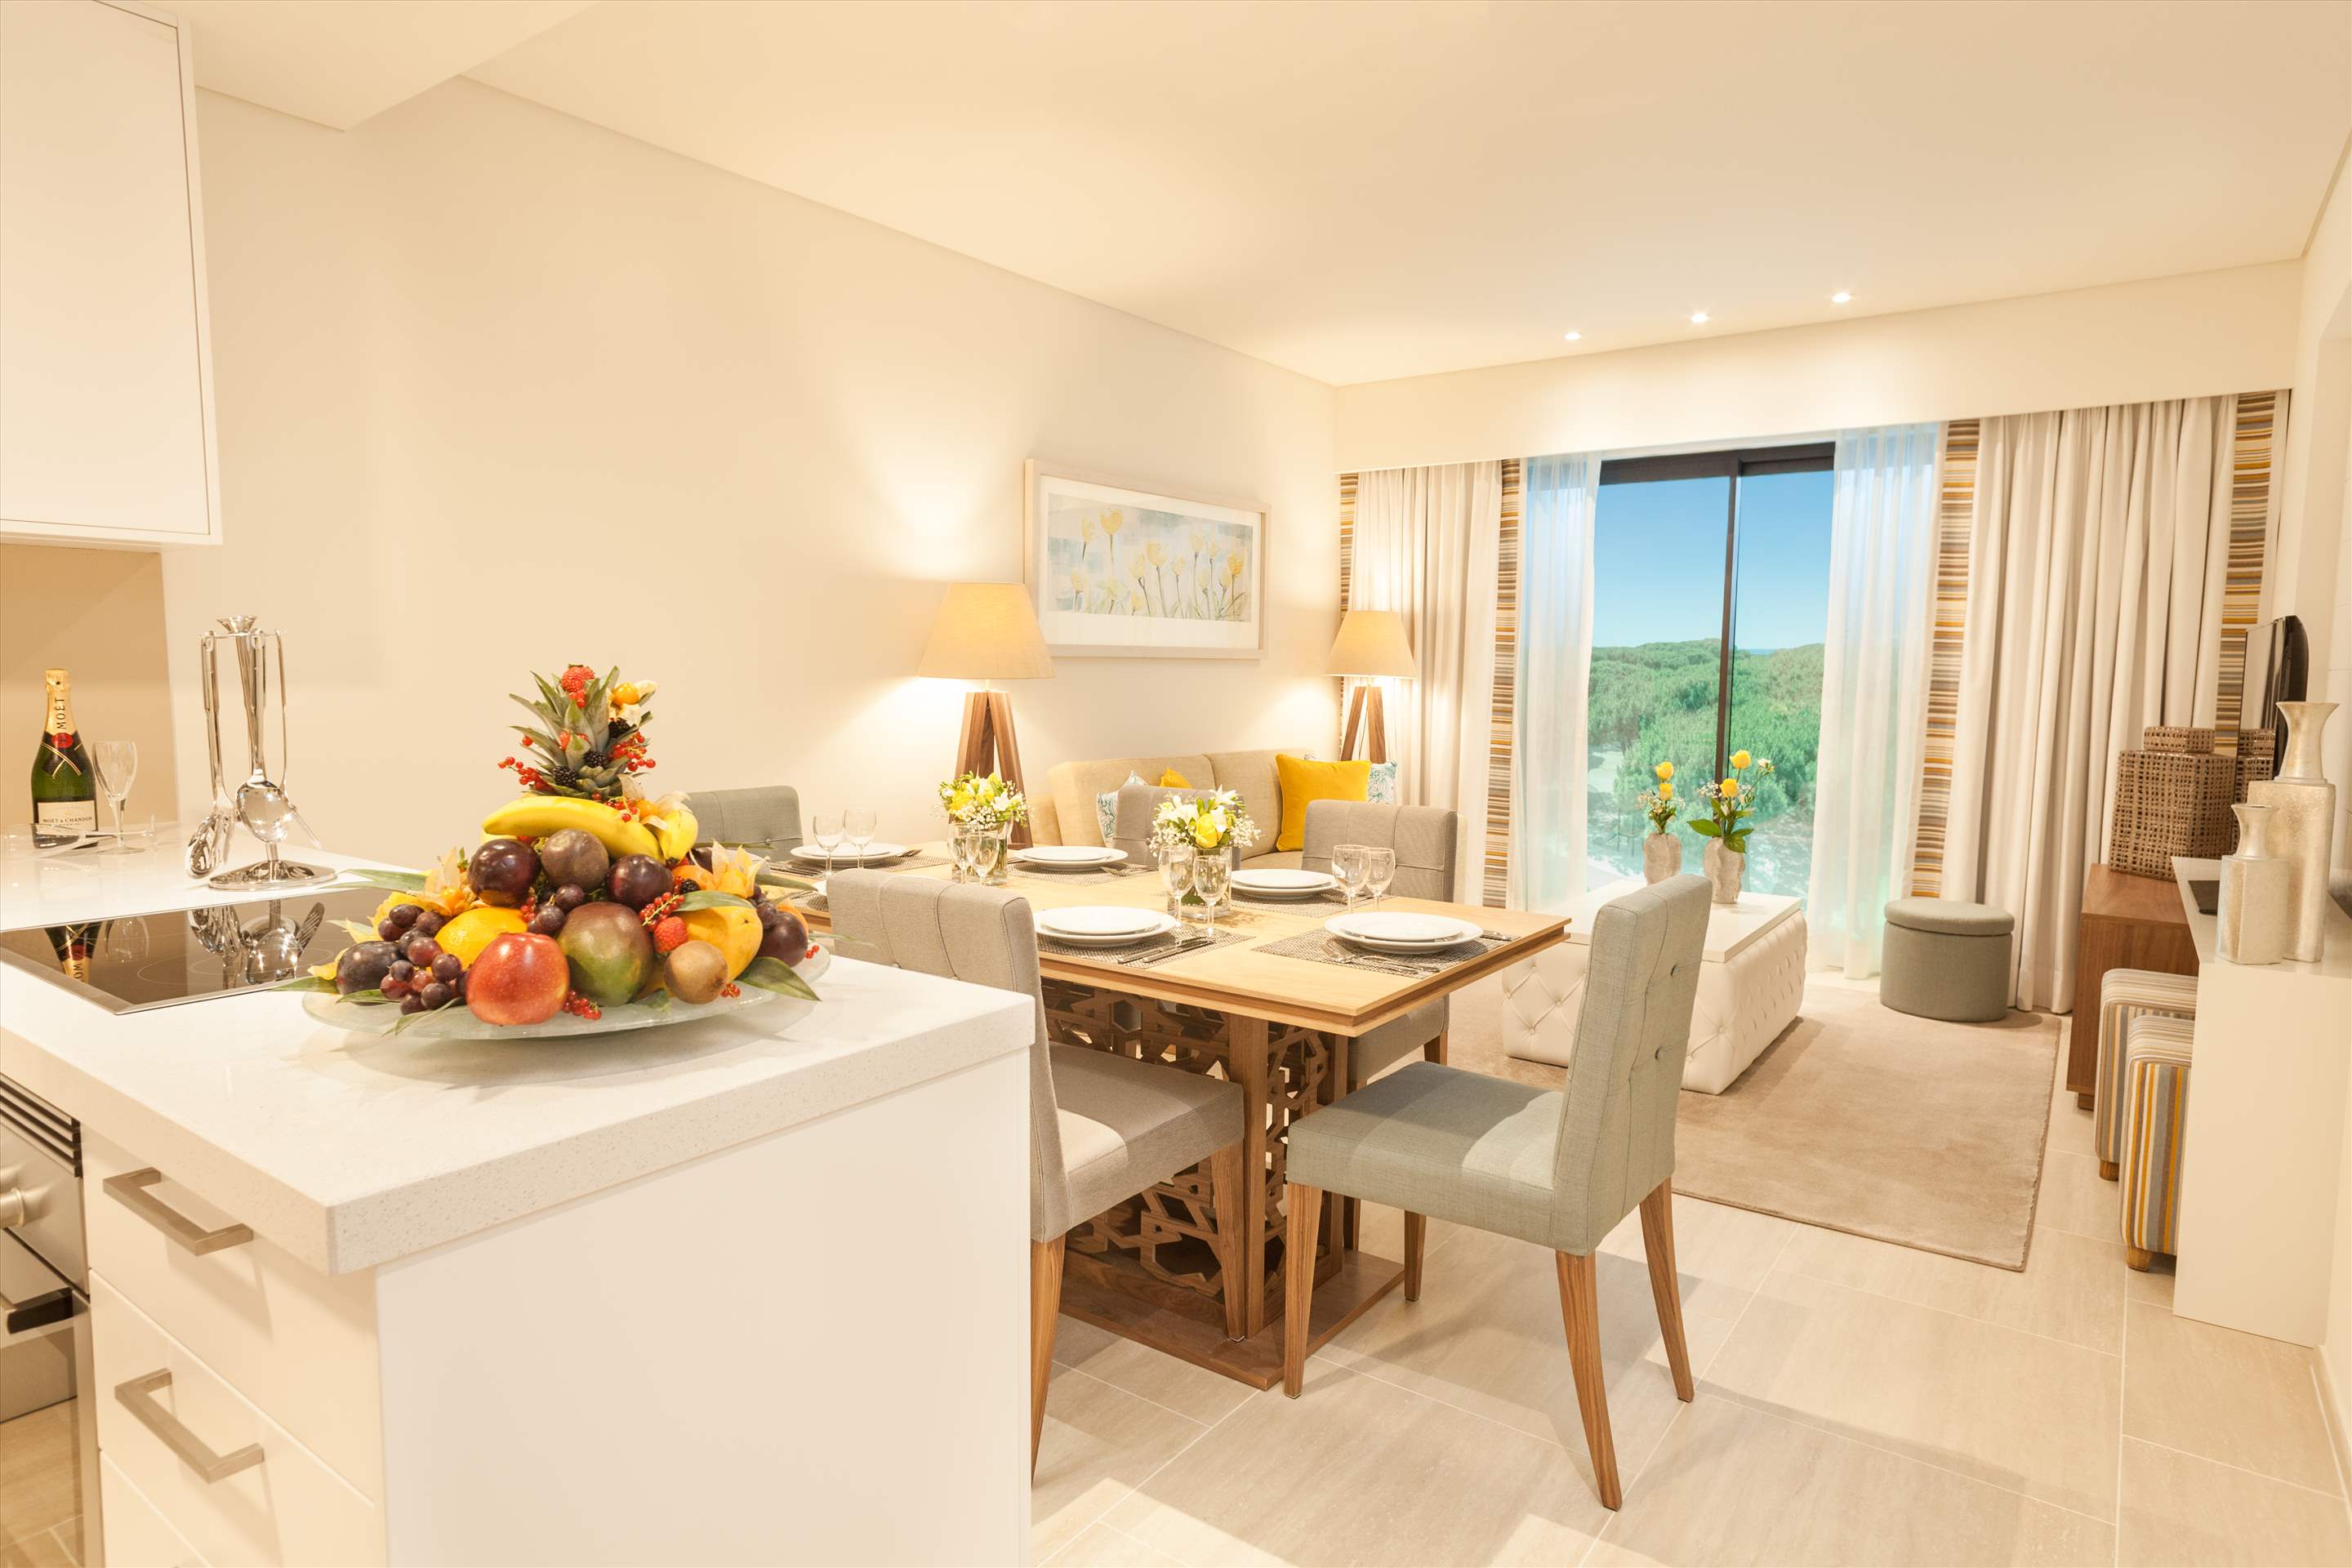 Pine Cliffs Gardens, One Bedroom Suite, S/C Basis, 1 bedroom apartment in Pine Cliffs Resort, Algarve Photo #2